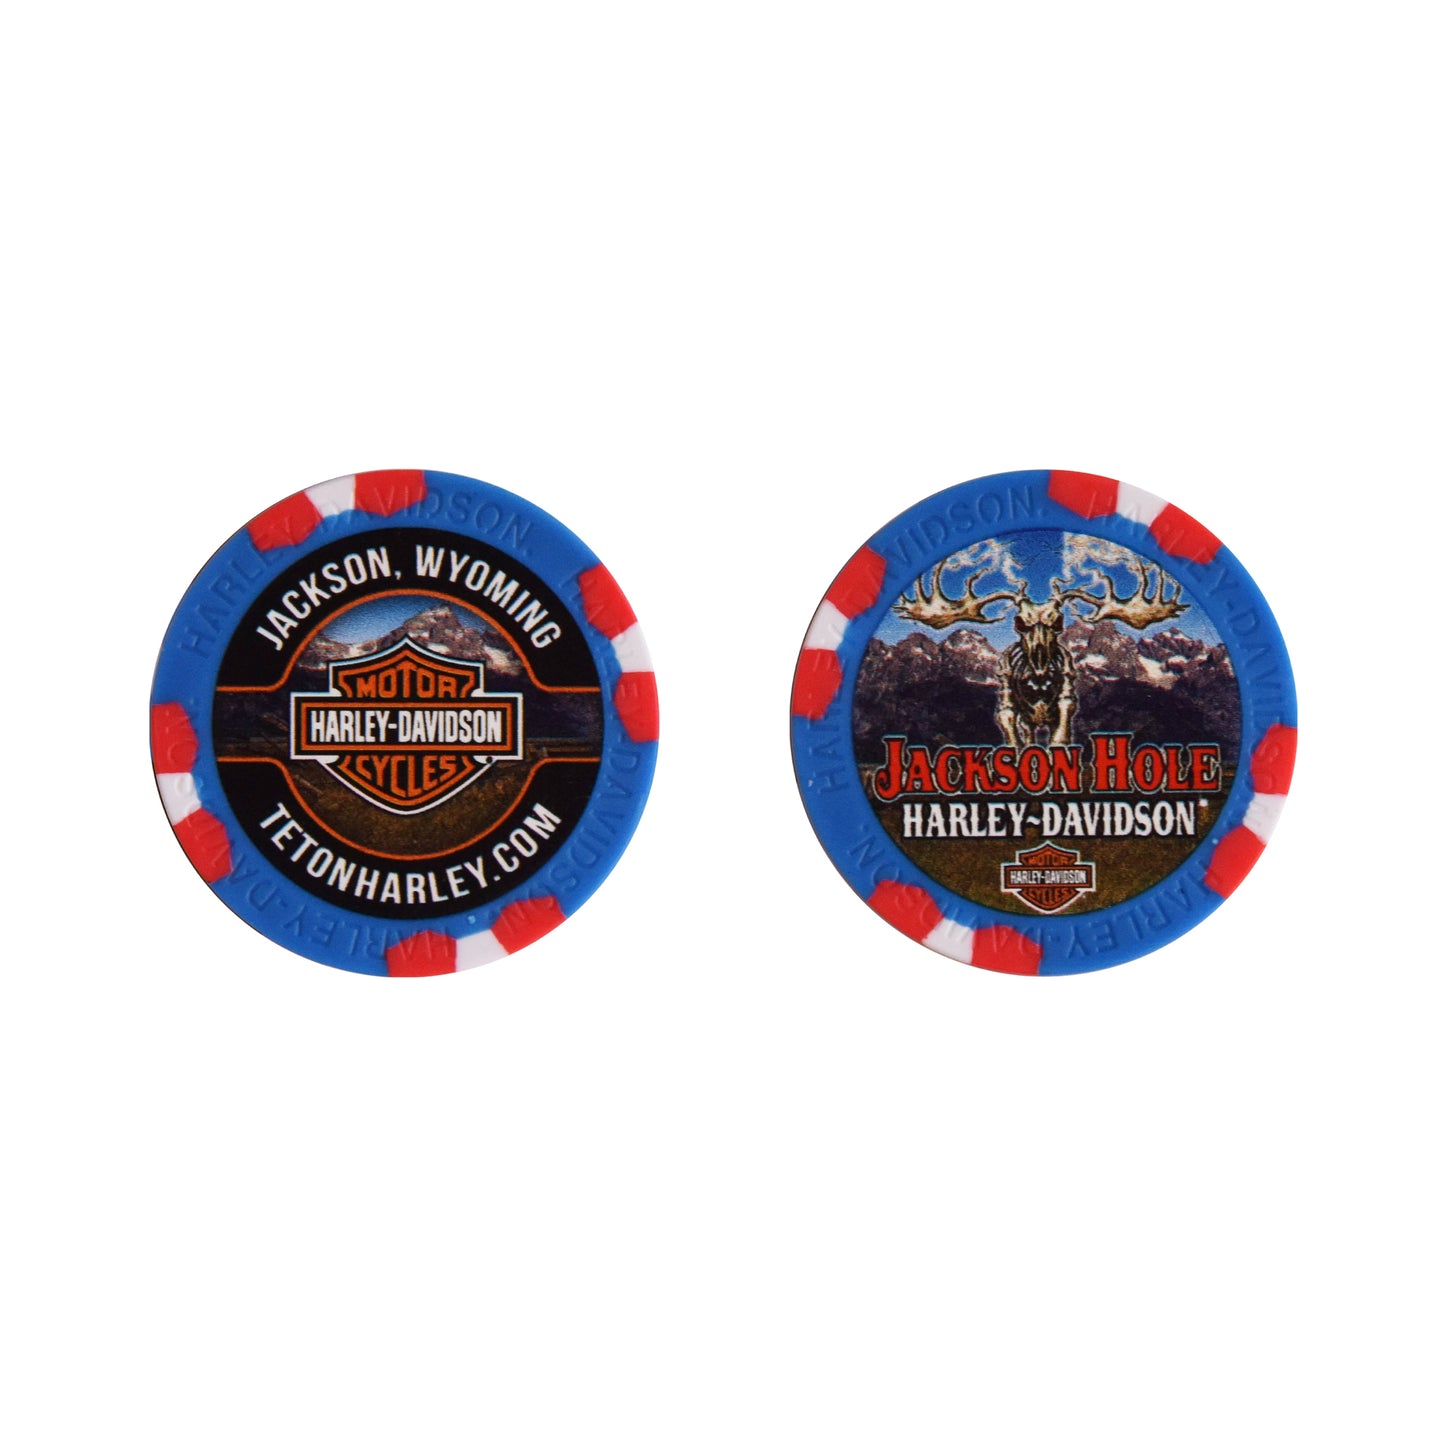 Jackson Hole Harley-Davidson Poker Chips